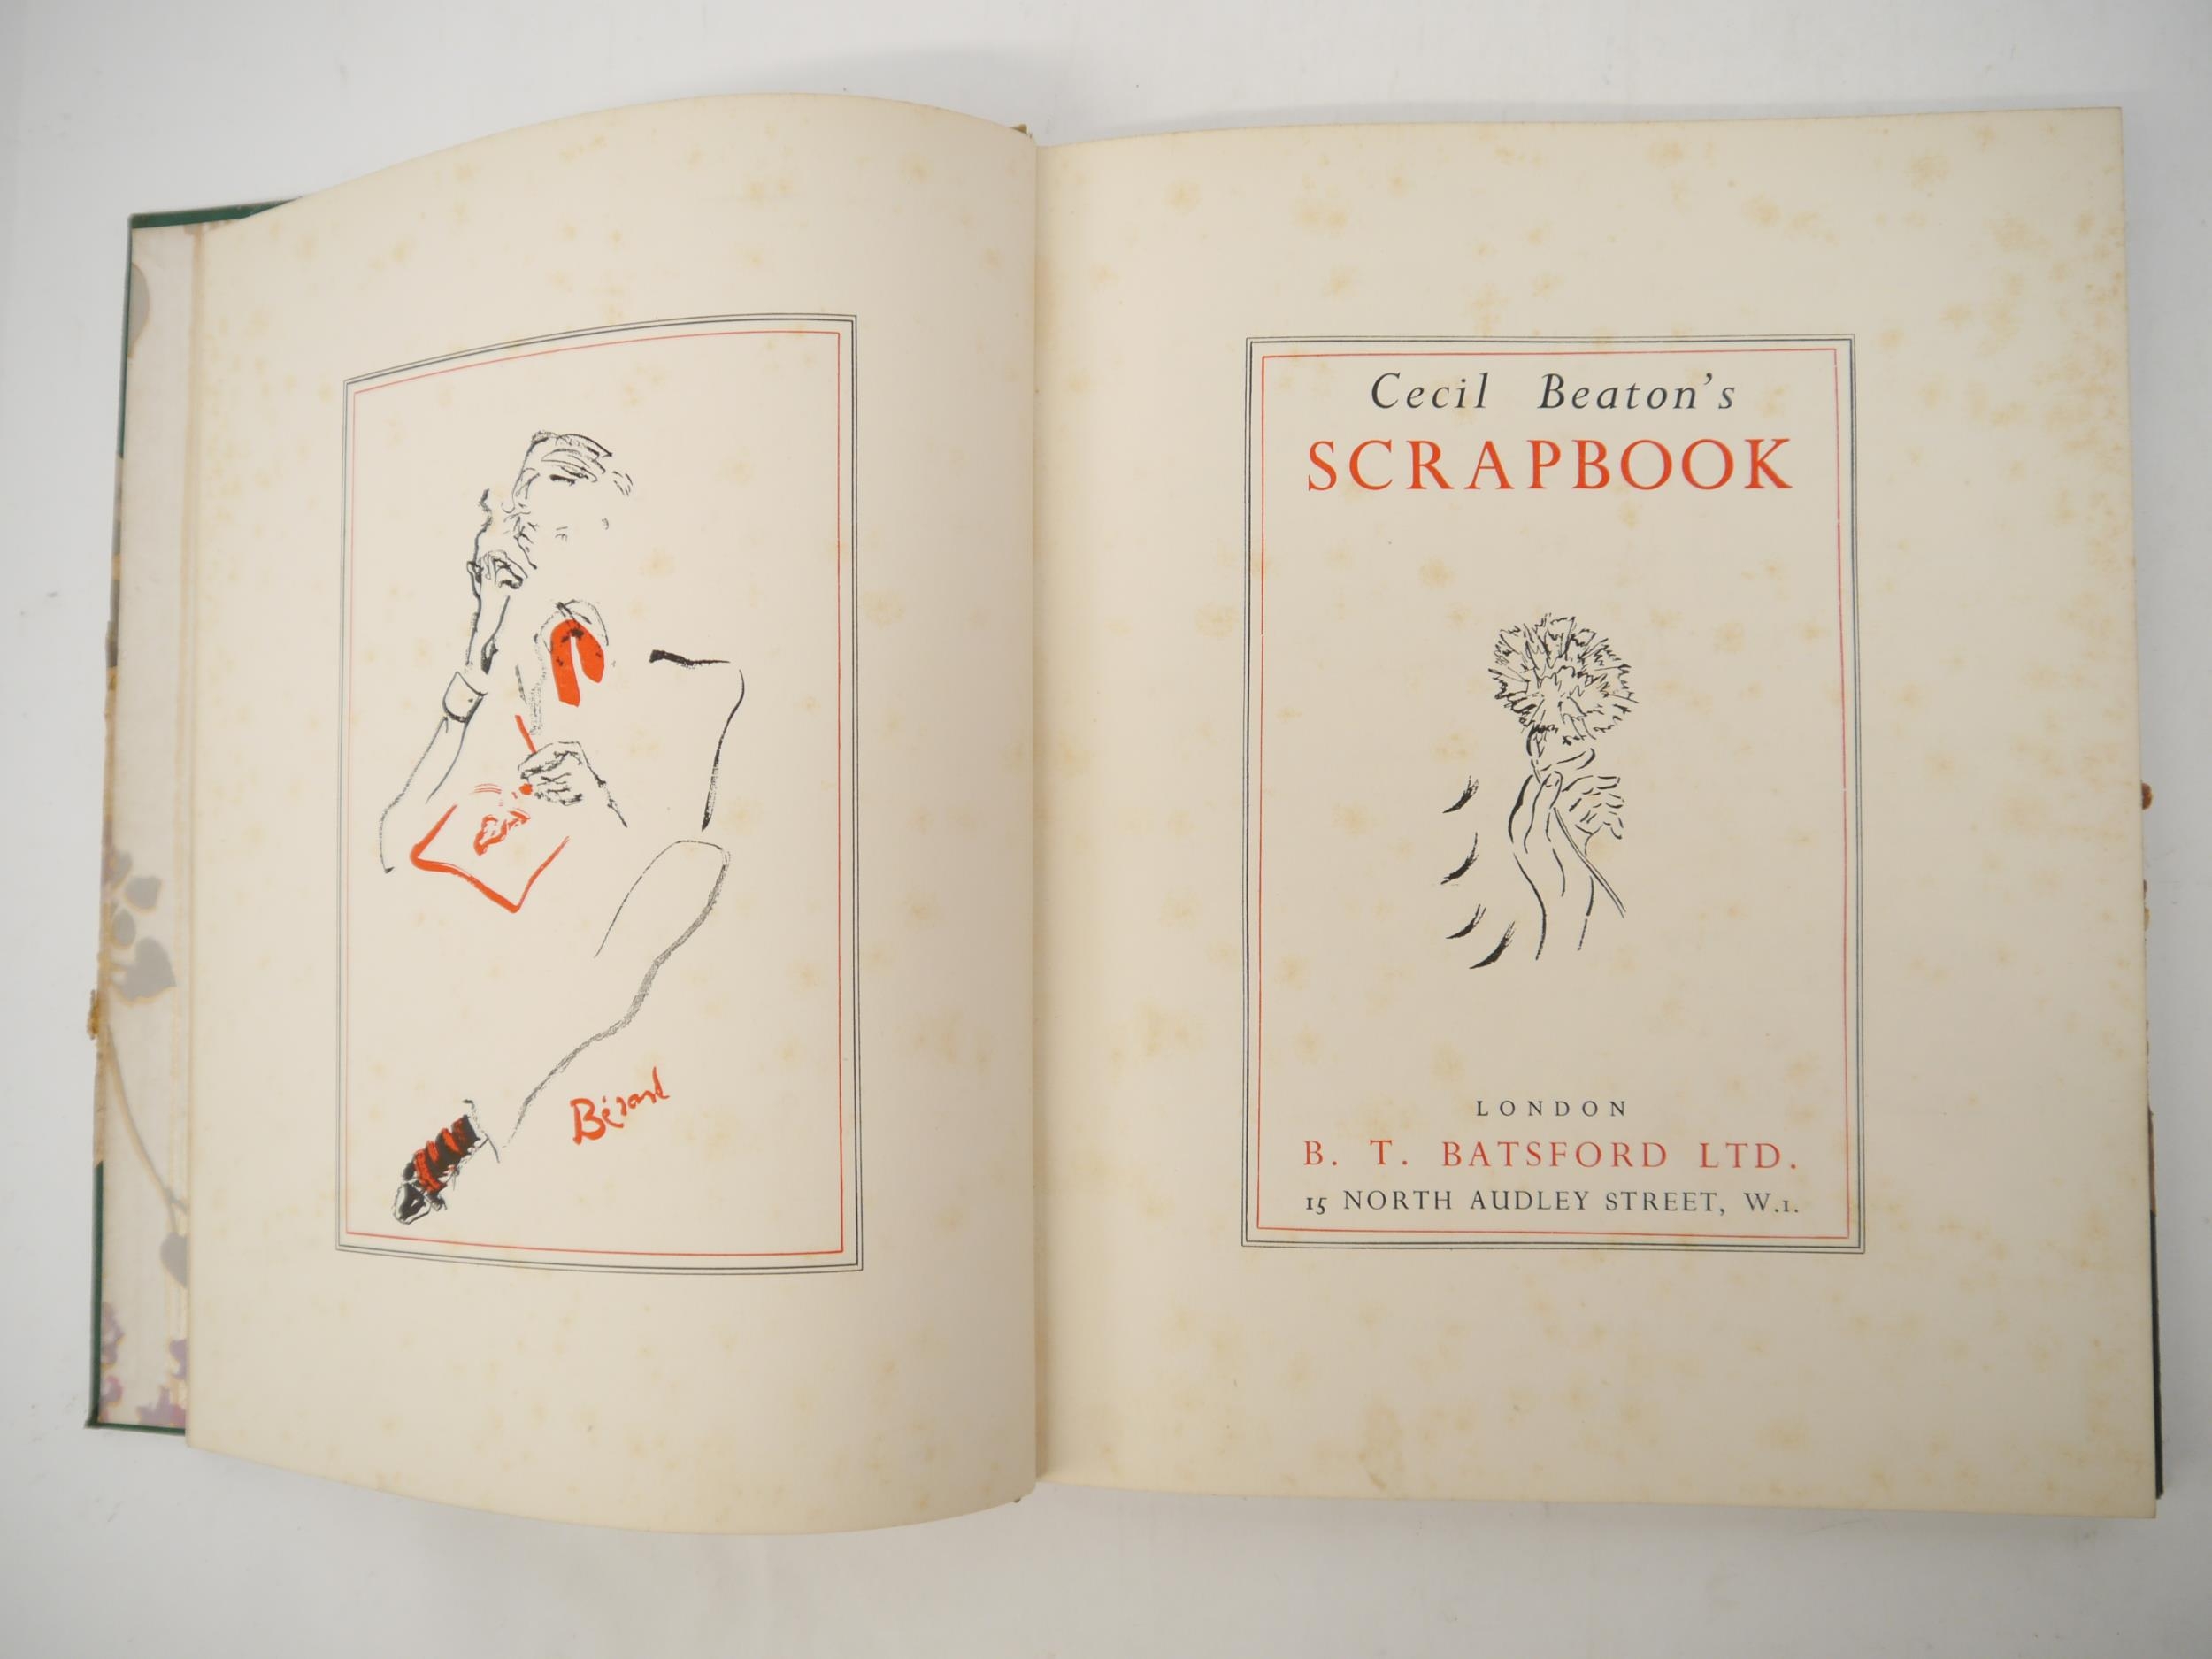 Cecil Beaton: 'Cecil Beaton's Scrapbook', London, B.T. Batsford, 1937, 1st edition, colour & b/w - Image 2 of 3